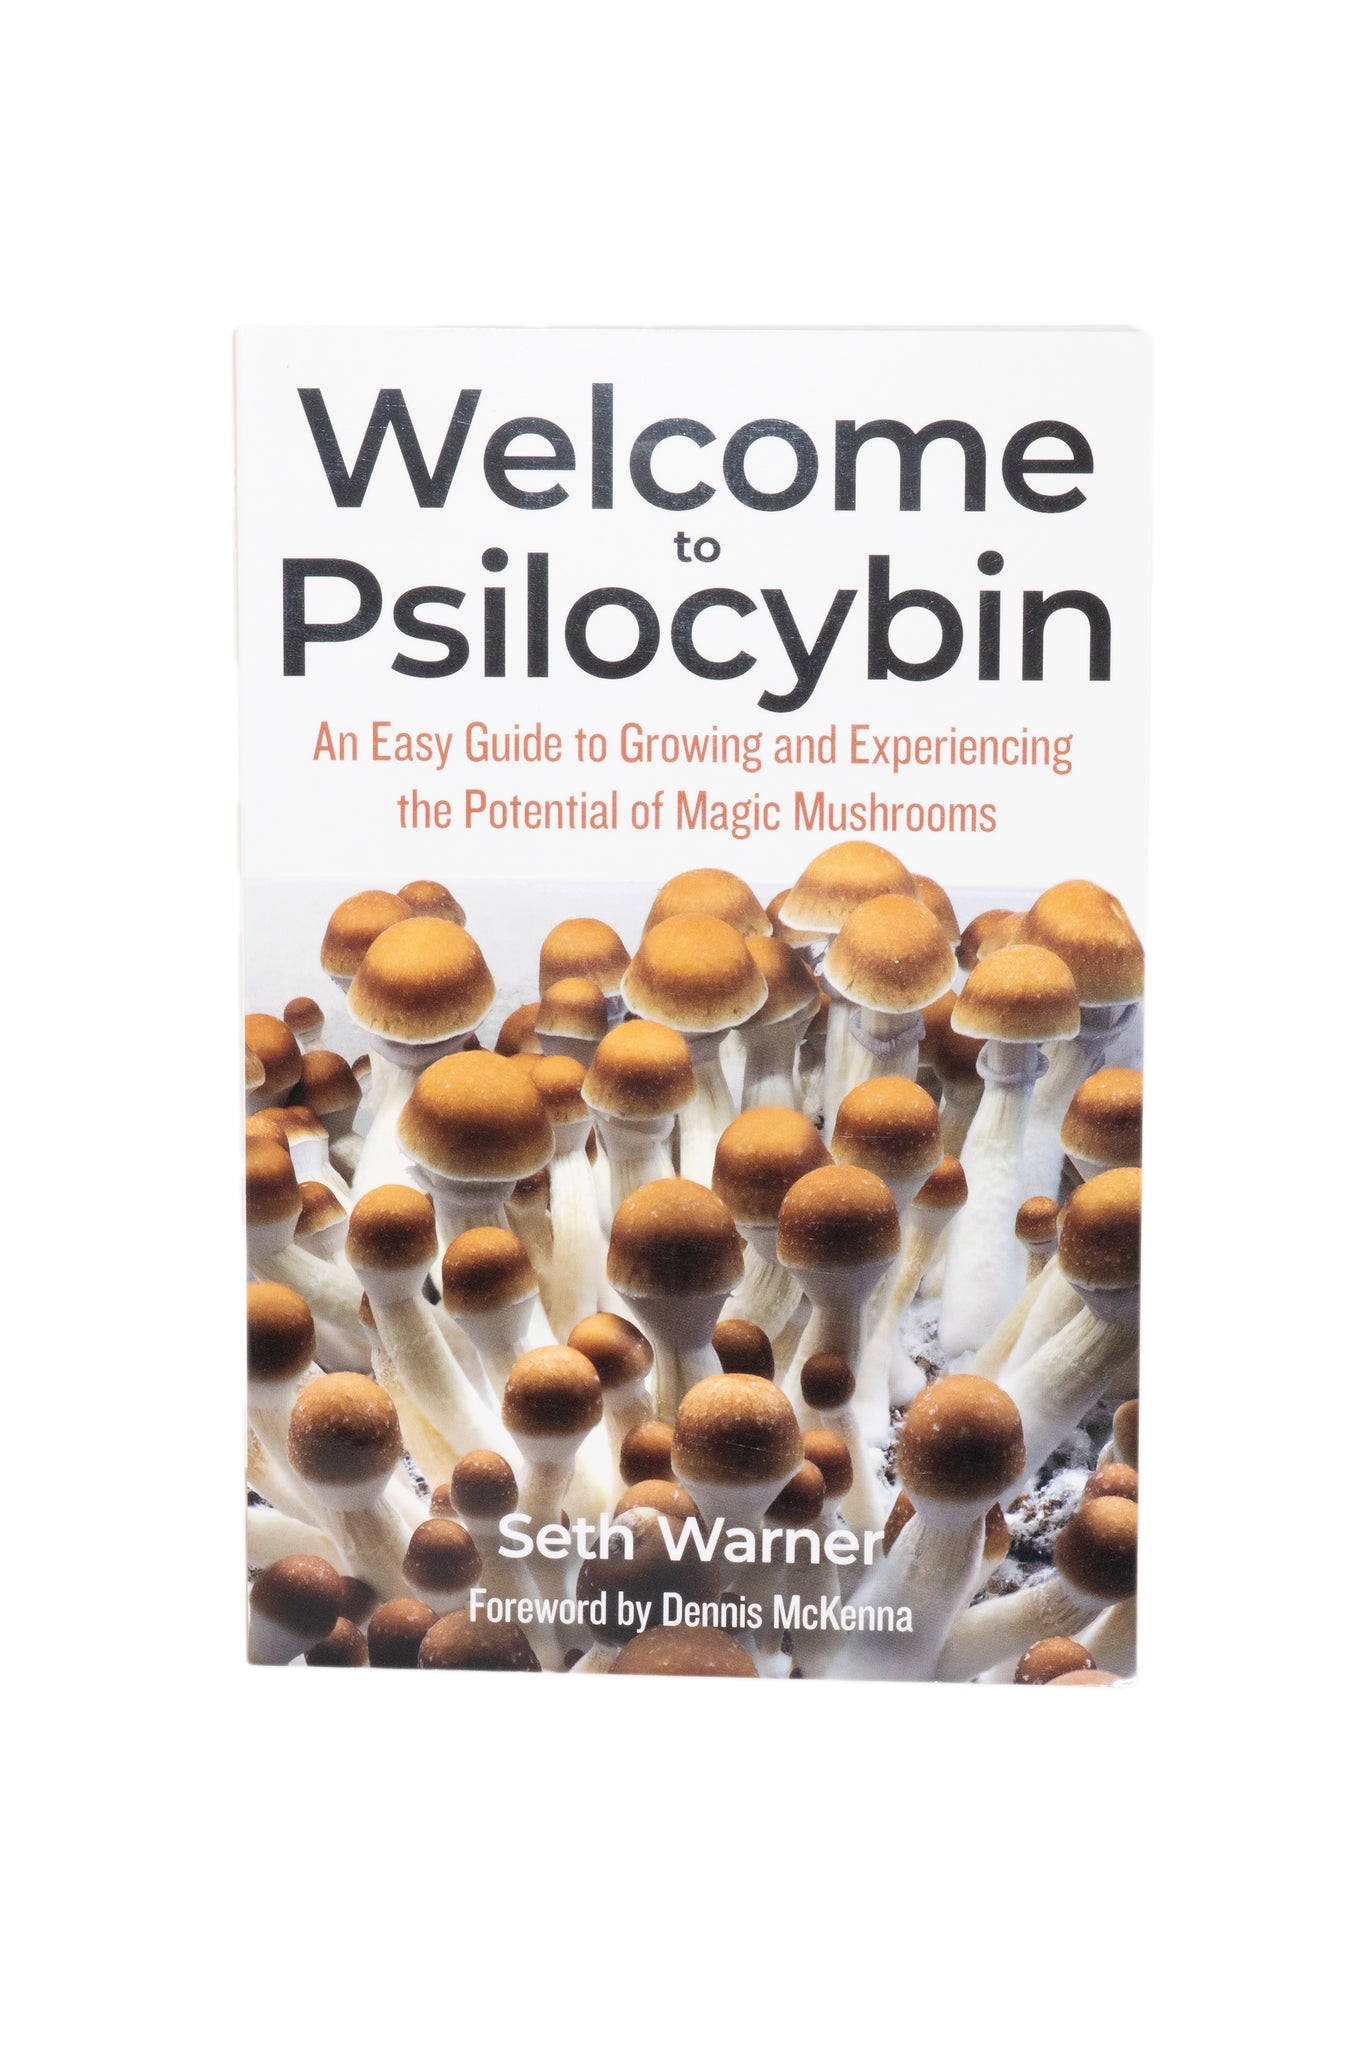 WELCOME TO PSILOCYBIN